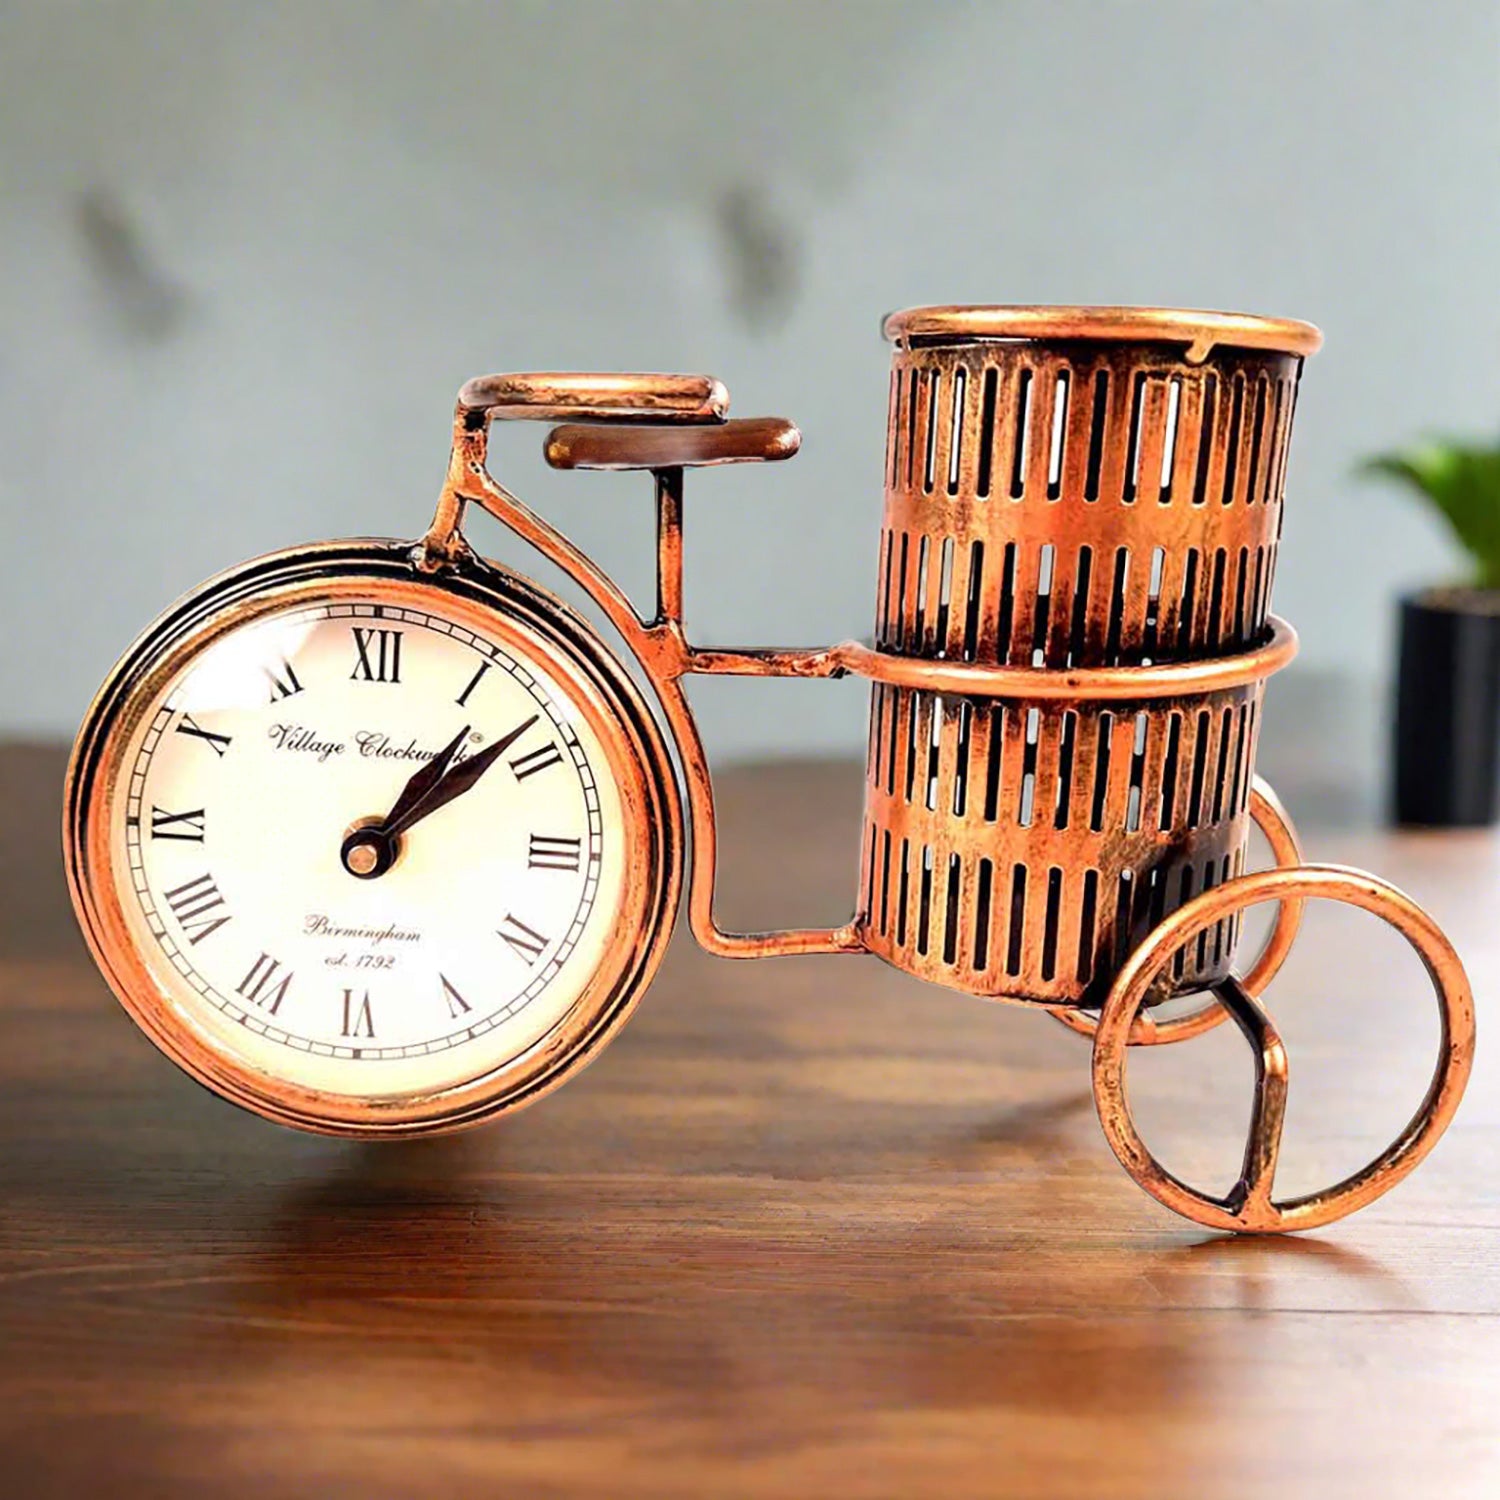 Antique Table Clock - For Table & Shlef Decor - 6 inch - ApkaMart